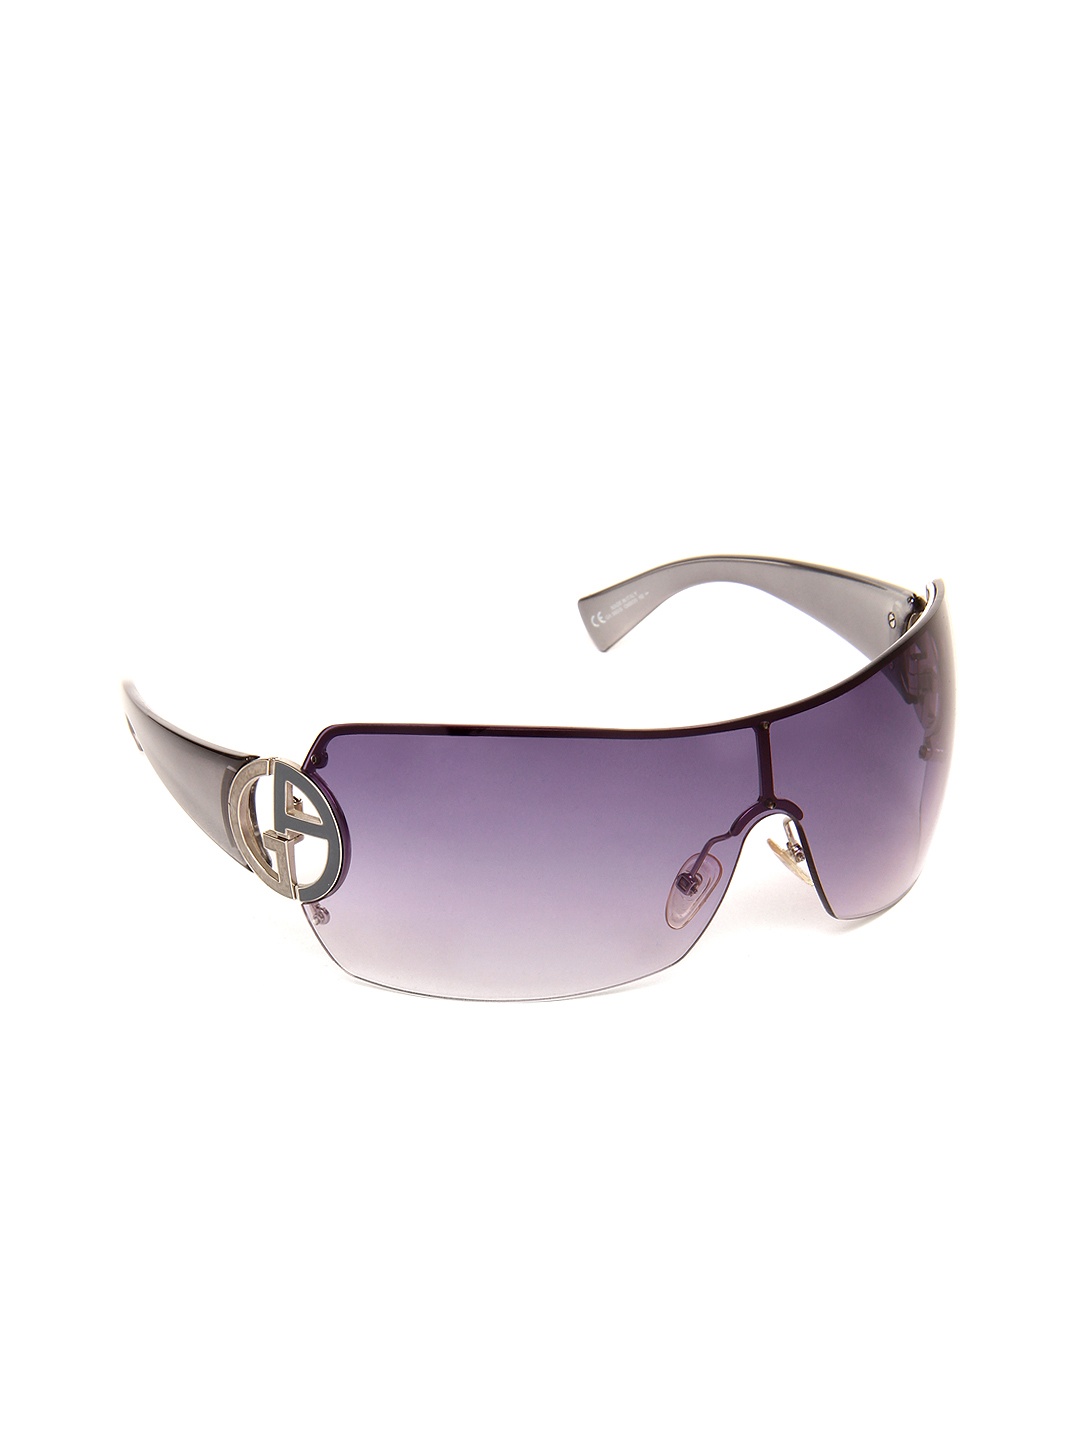 Myntra Giorgio Armani Women Sunglasses GA 560 404874 | Buy Myntra ...